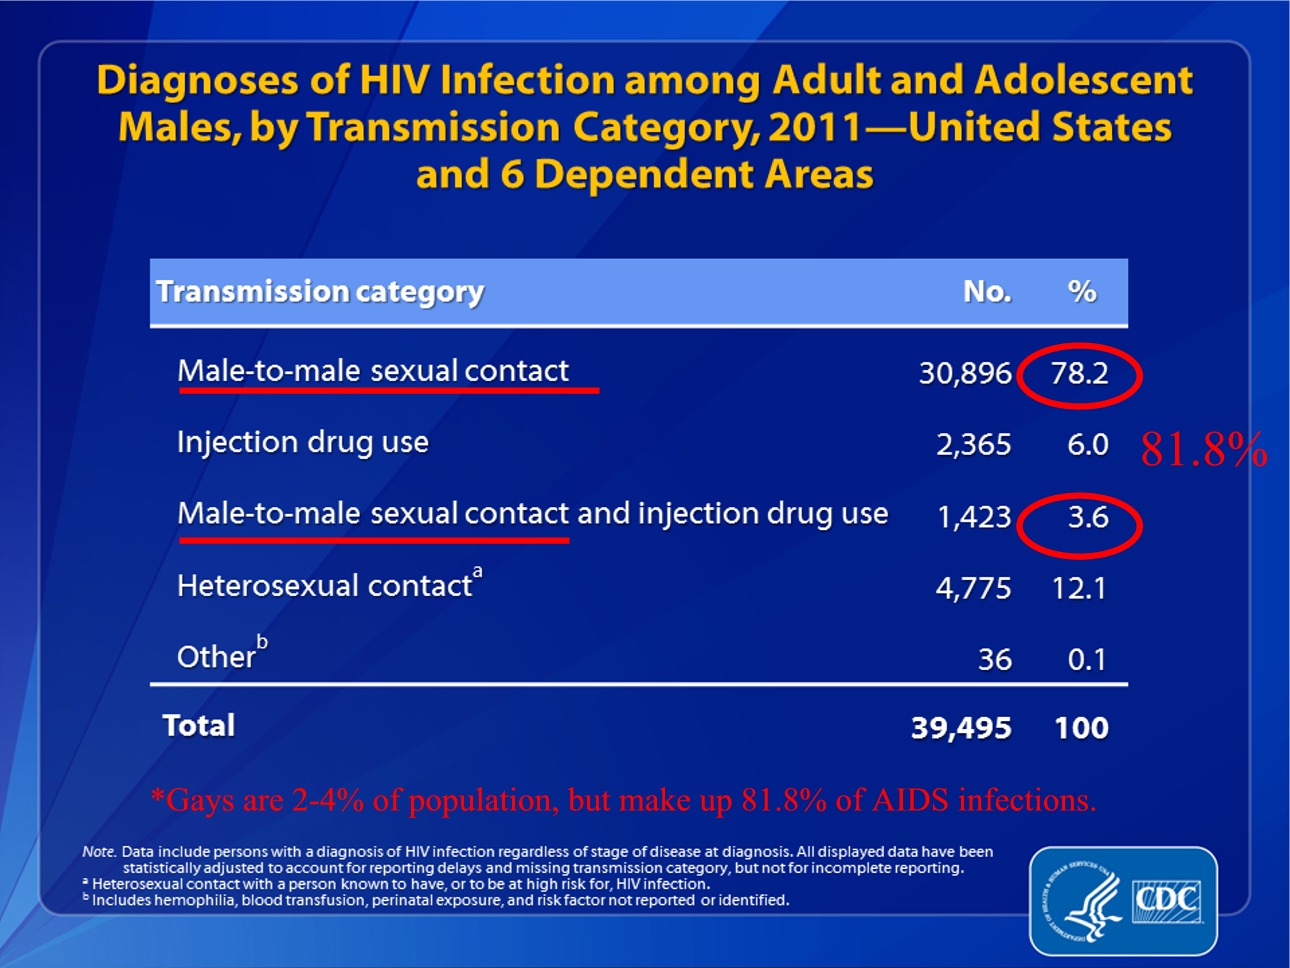 SAD TRUTH ABOUT AIDS-HIV